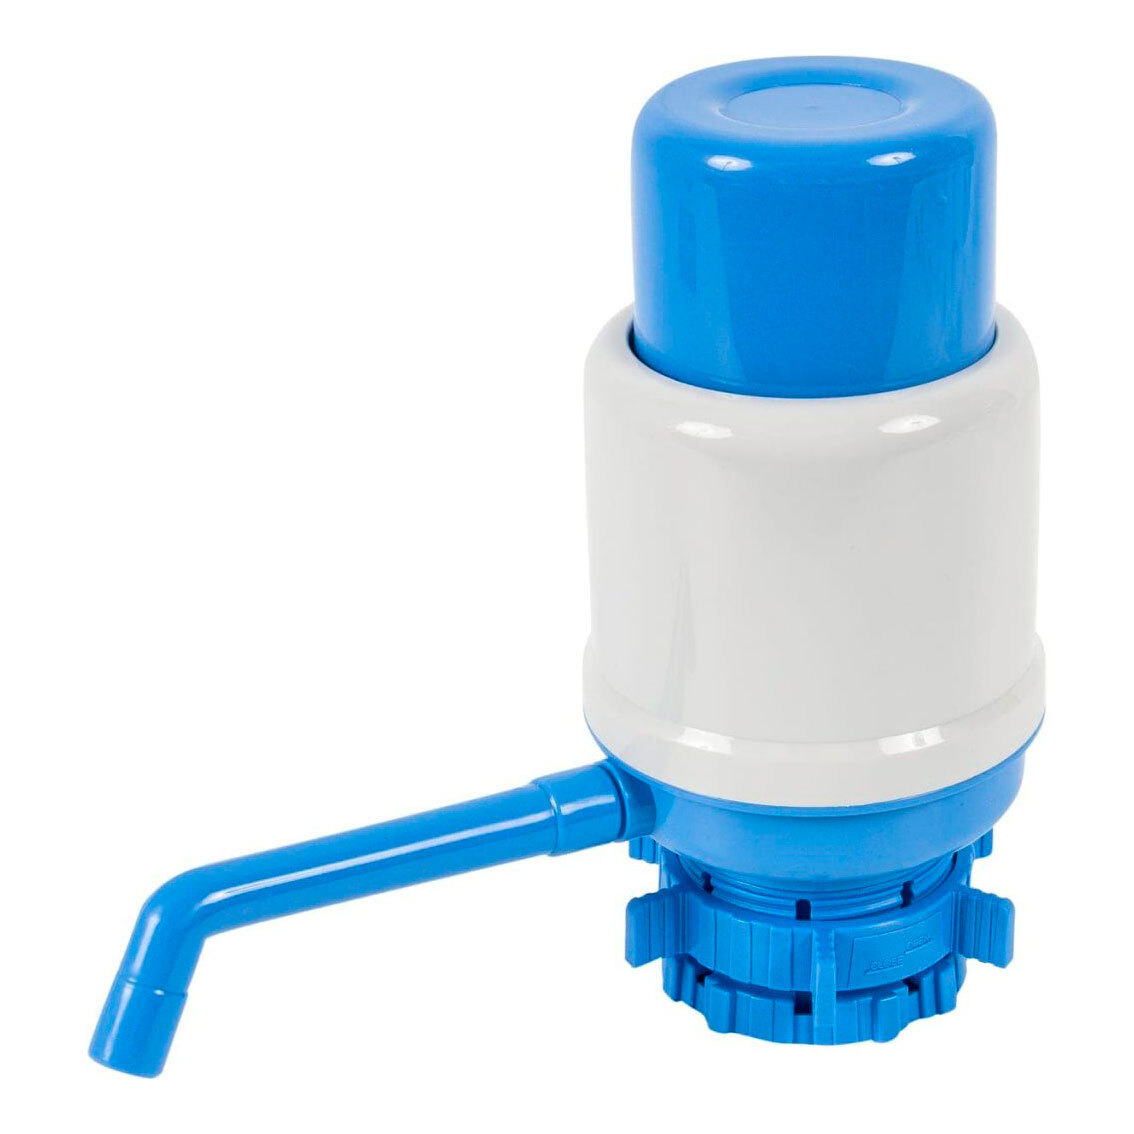 Характеристики Помпа для воды Drinking Water Pump, белый, подробное .